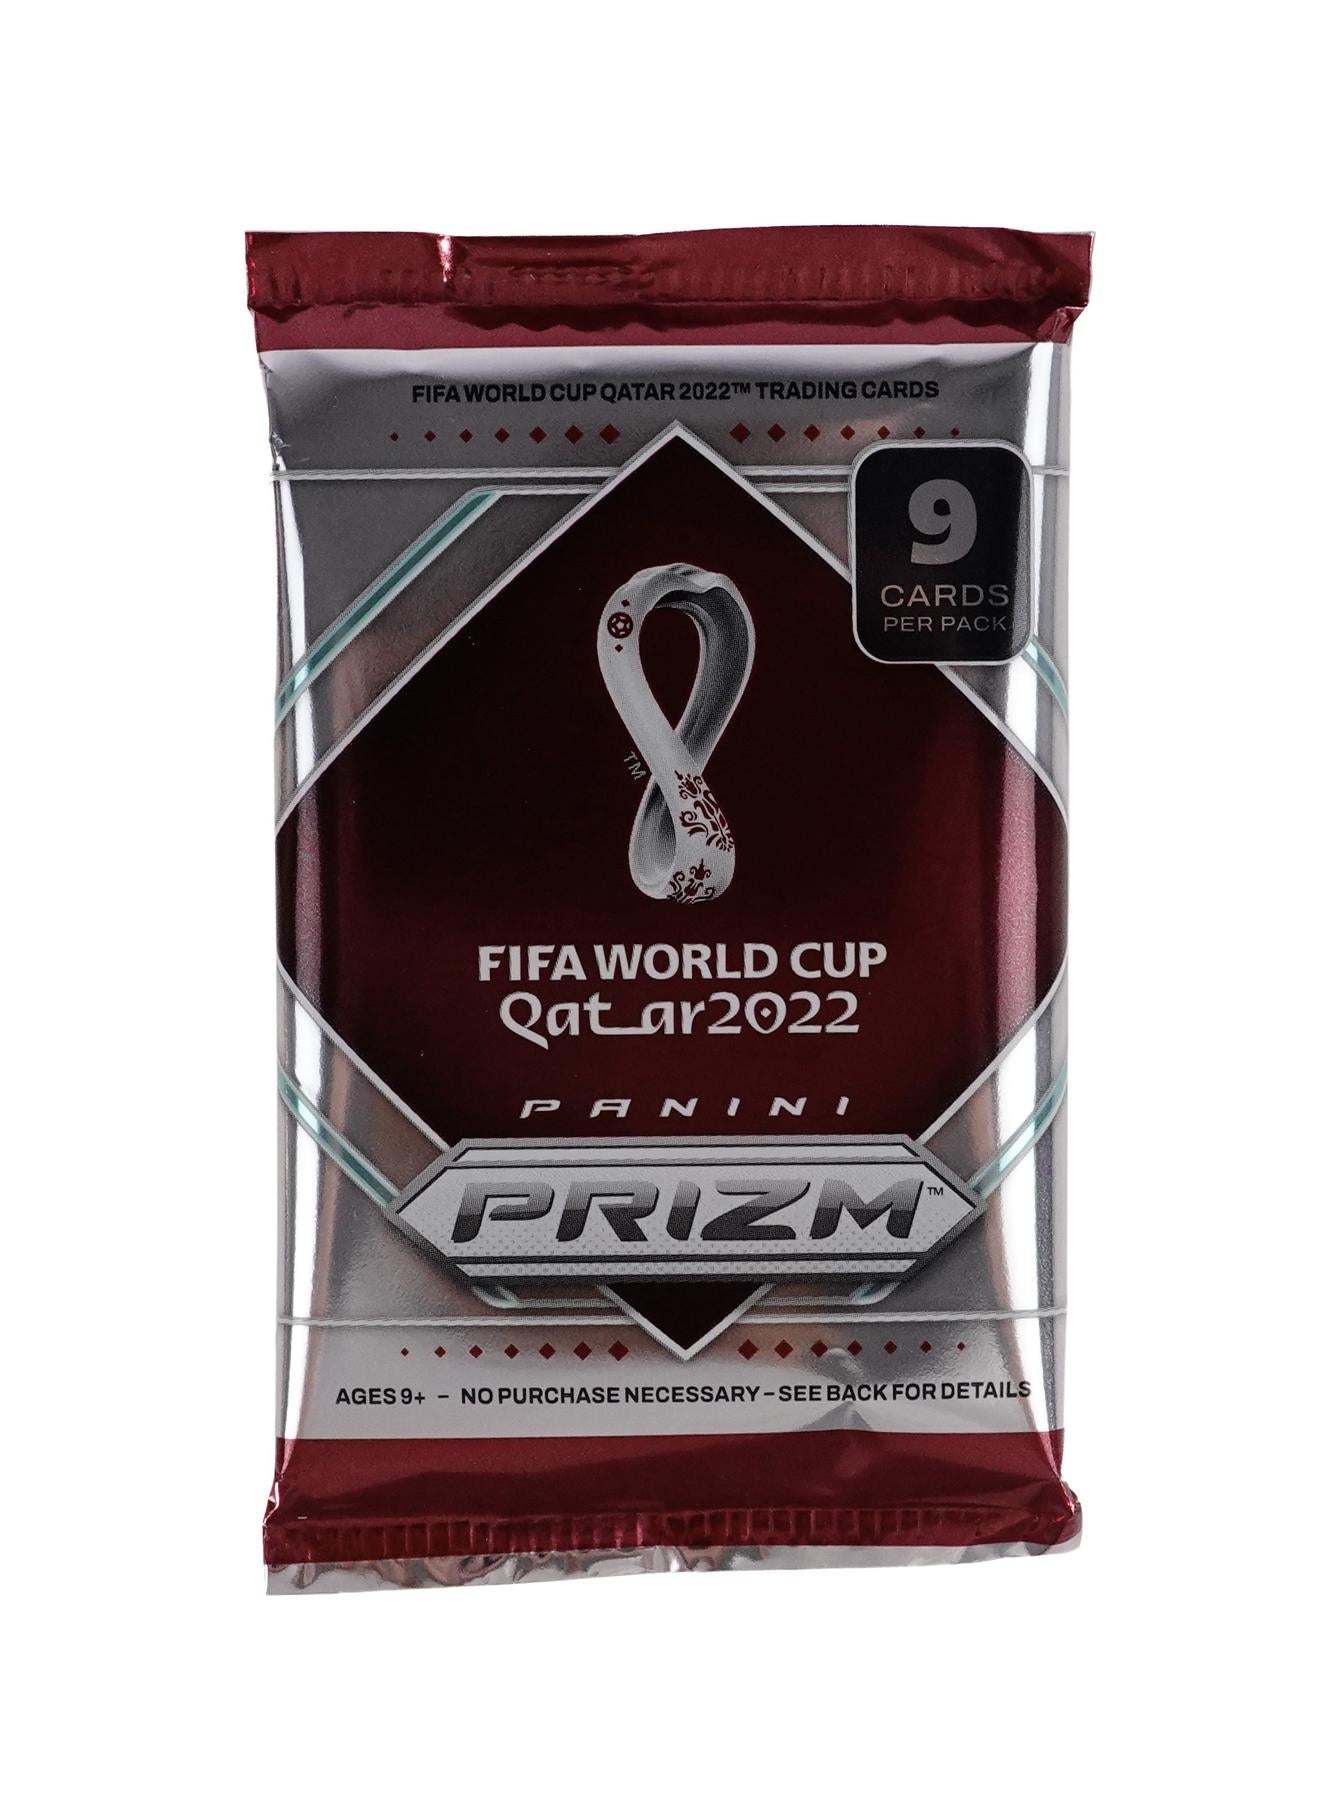 PANINI Prizm FIFA World Cup Qatar 2022